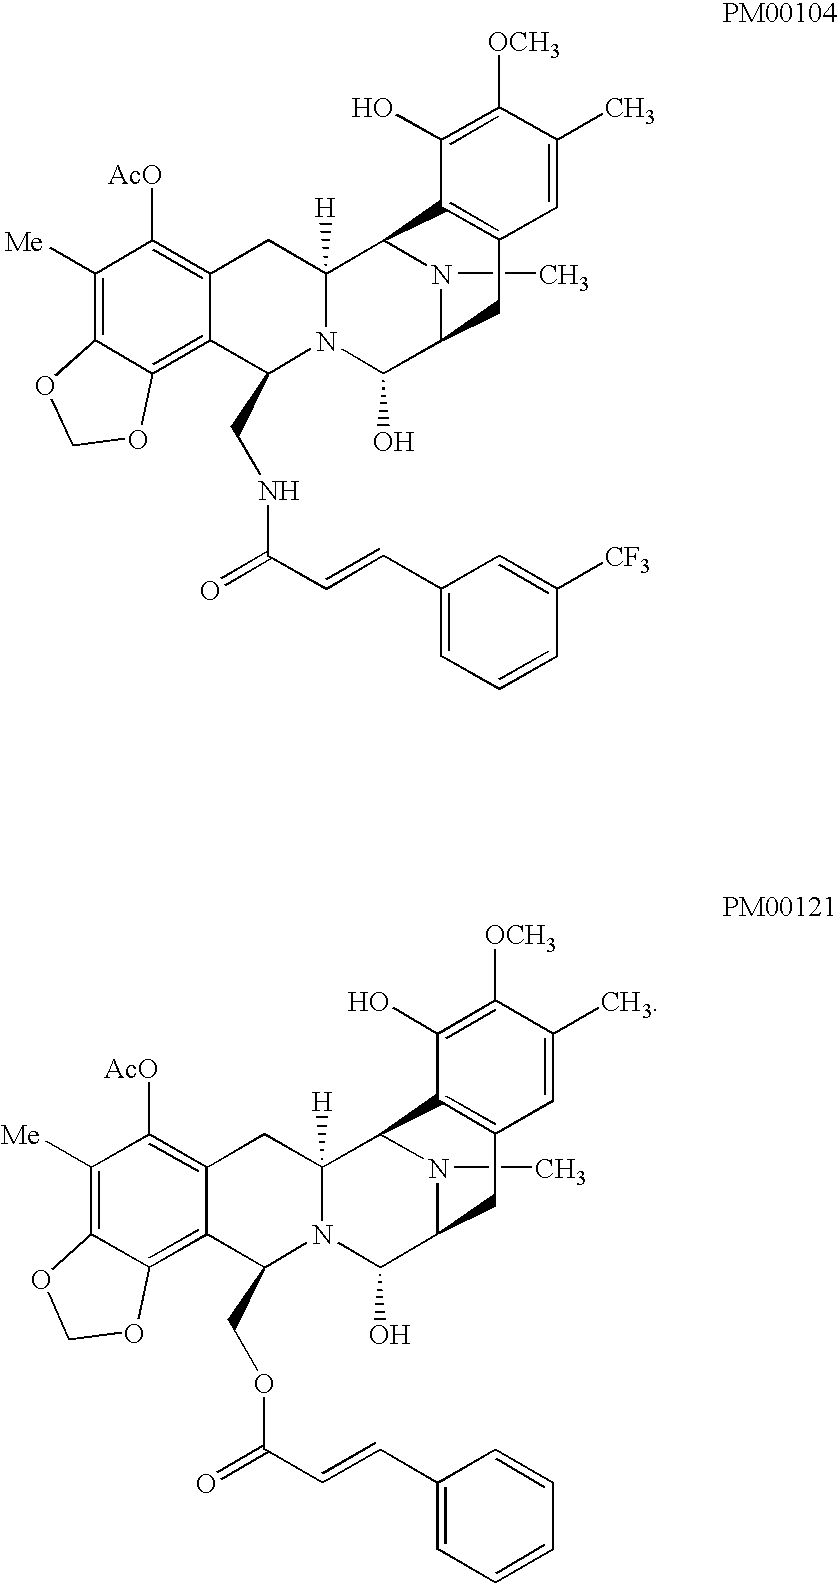 Formulations comprising jorumycin-, renieramycin-, safracin- or saframycin-related compounds for treating proliferative diseases